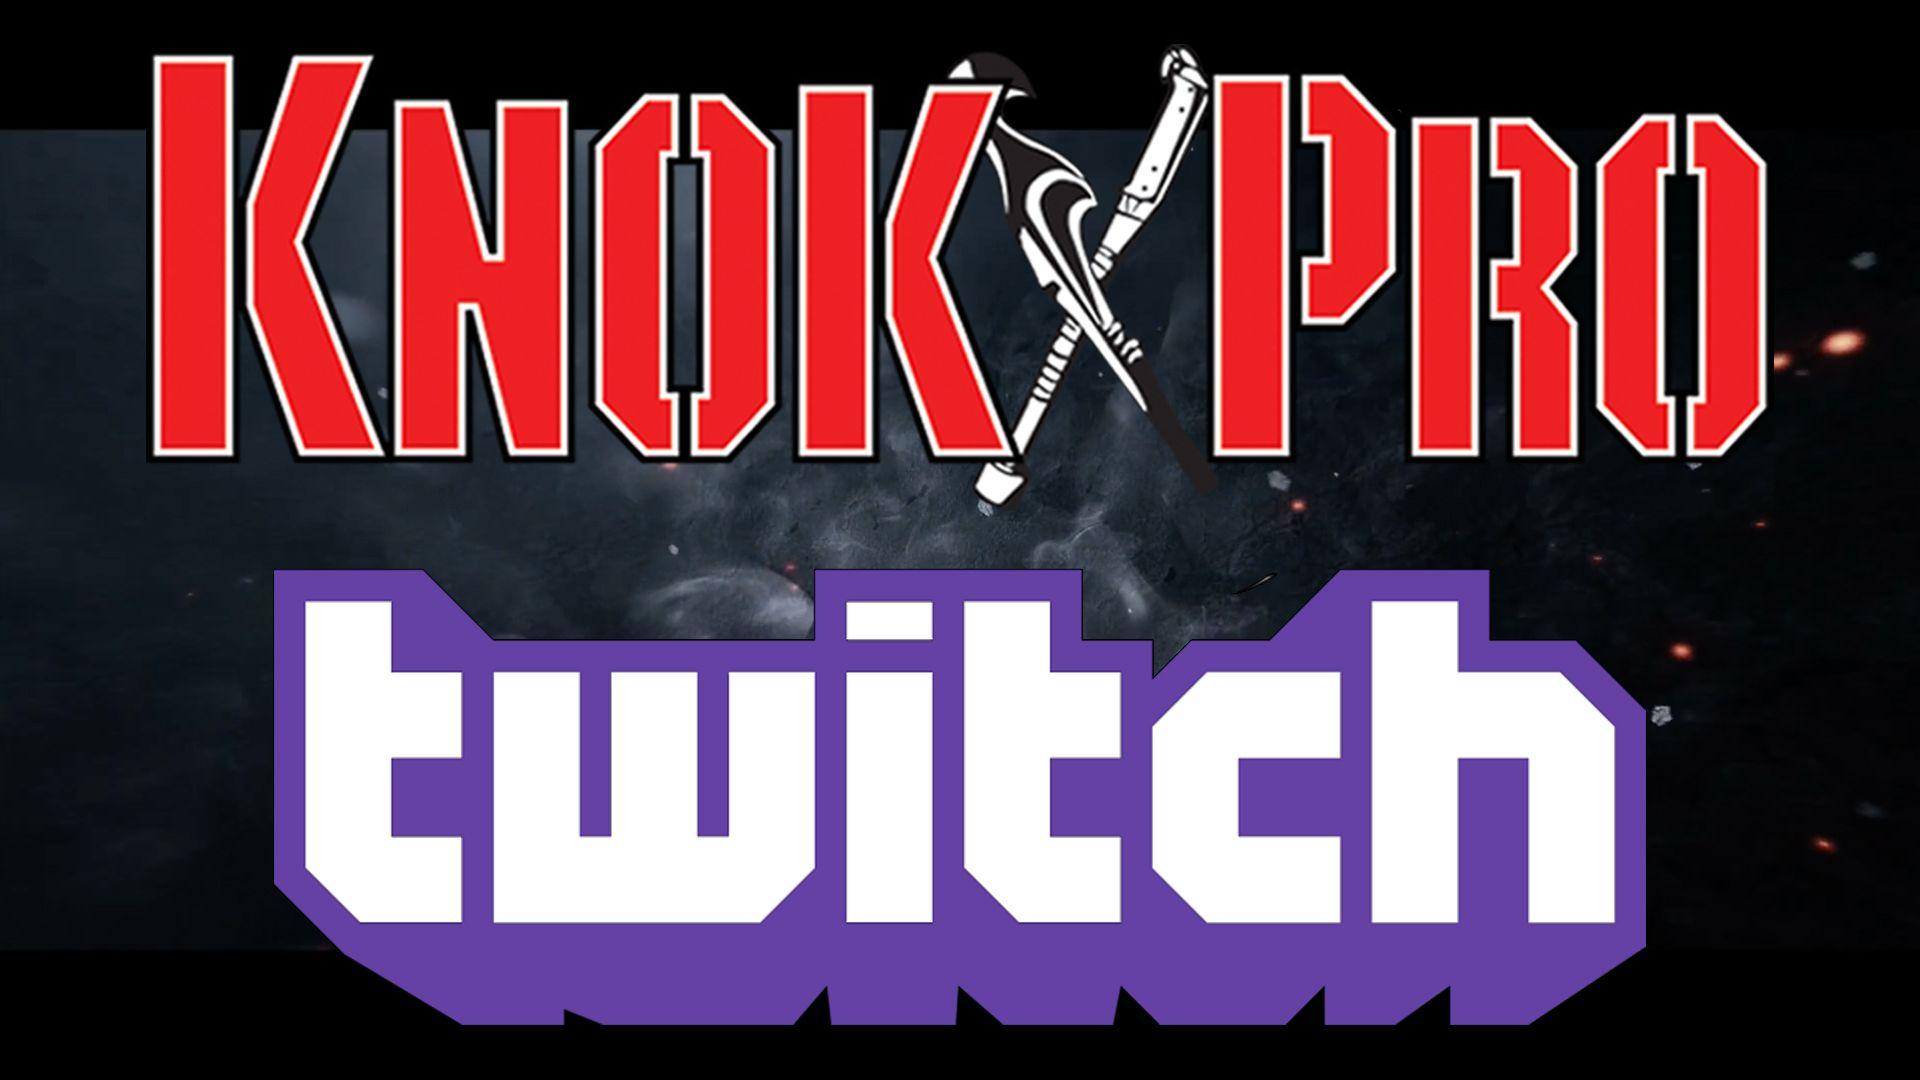 Rikishi Logo - Home. KnokX Pro Entertainment